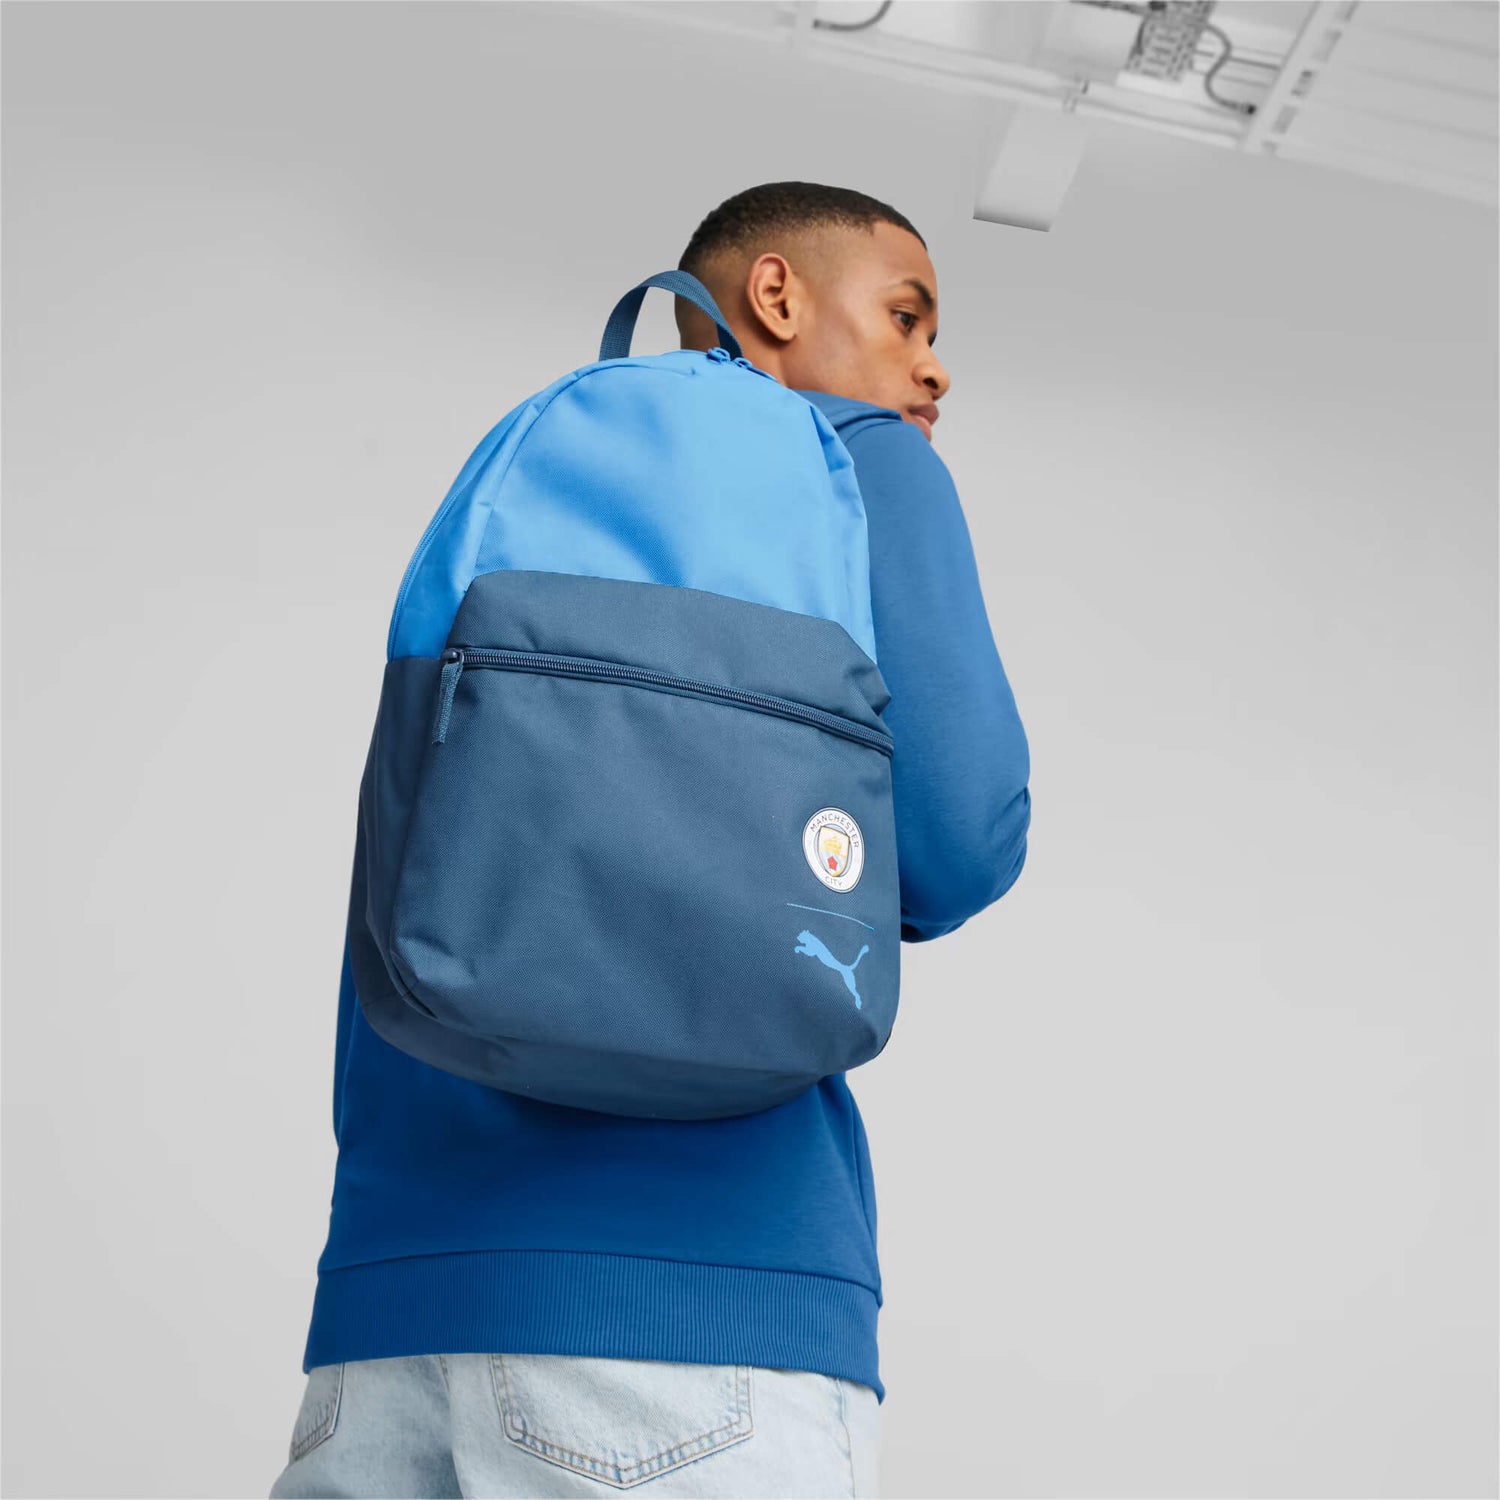 PUMA blue bowling style shoulder bag | Bags, Shoulder bag, Fashion bags